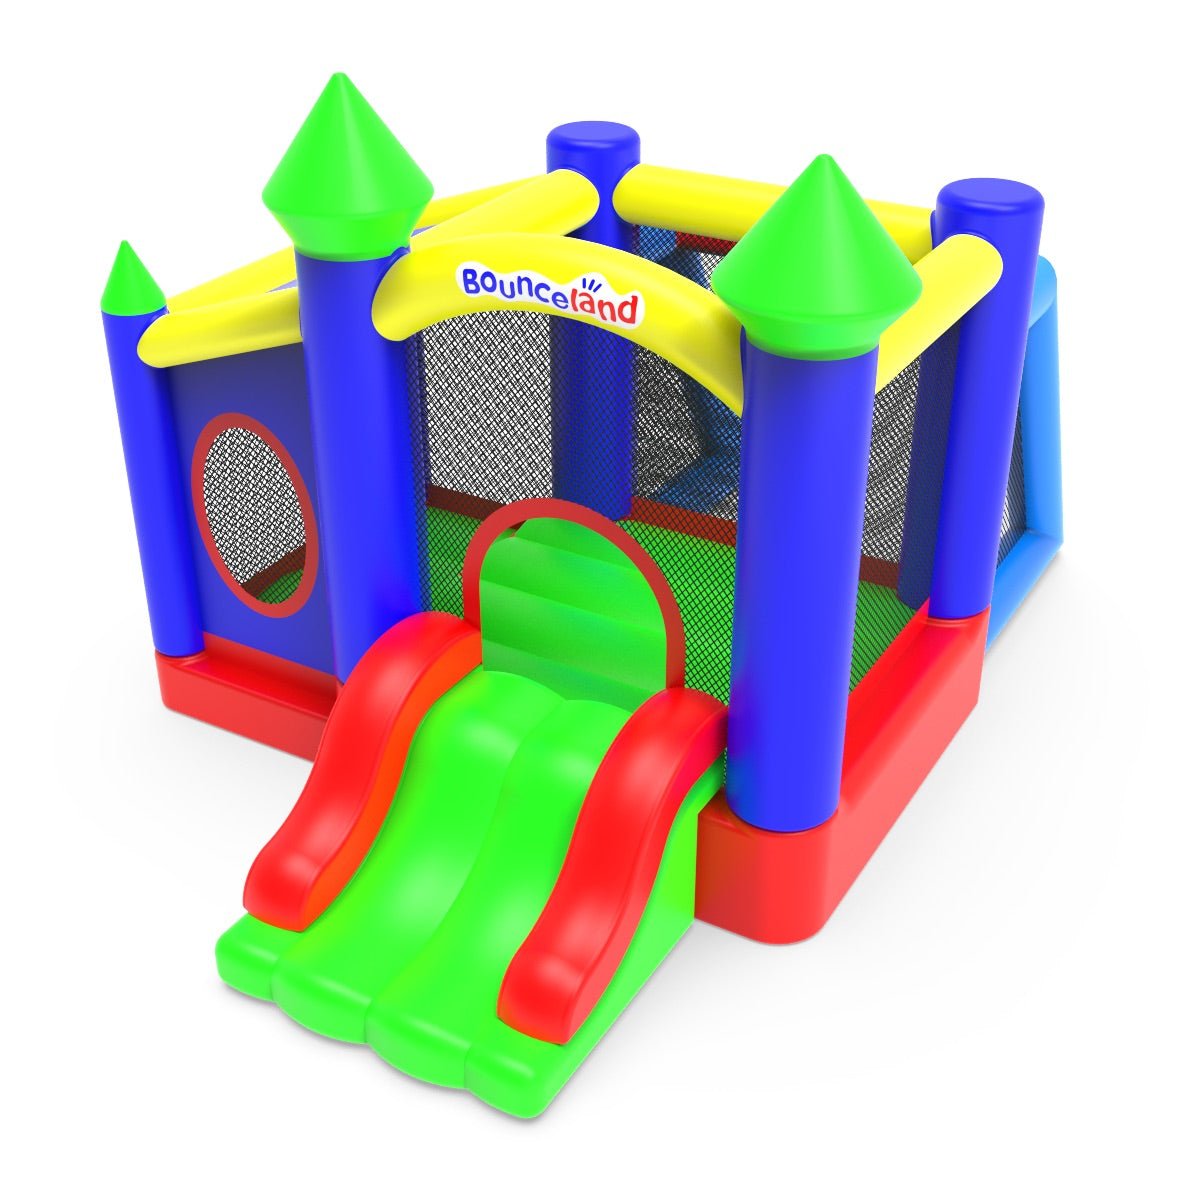 Bounceland inflatable Bouncy Castle with Blower – Deluxe Castle Activity Centre